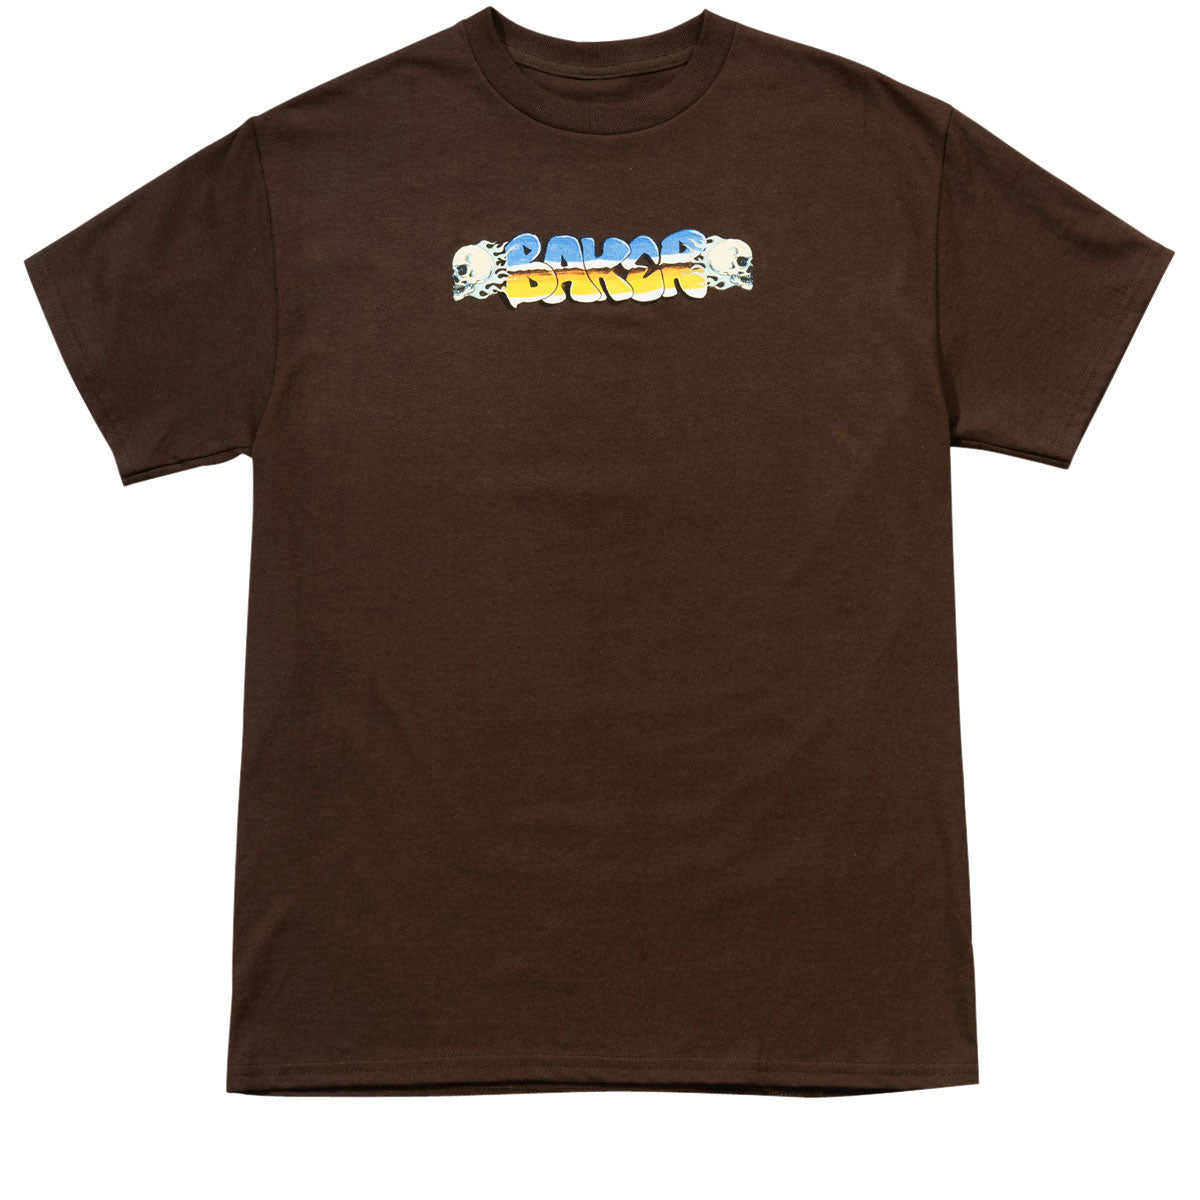 Baker Faster T-Shirt - Brown image 1